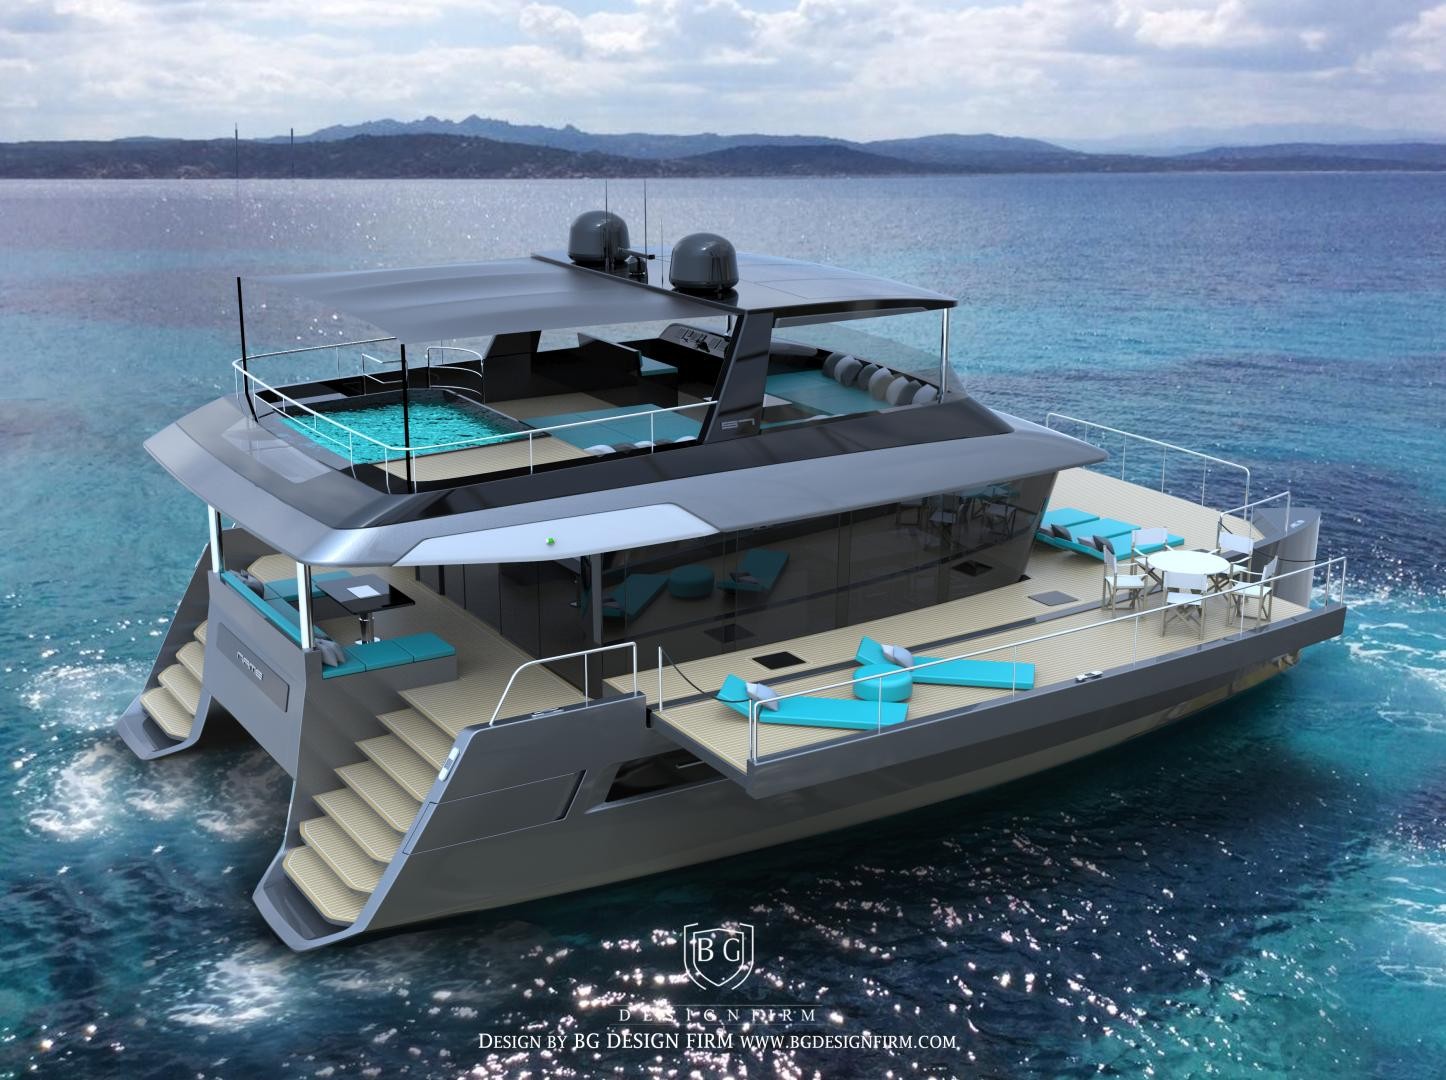 BG Design Firm -  Catamarano 57 FT 